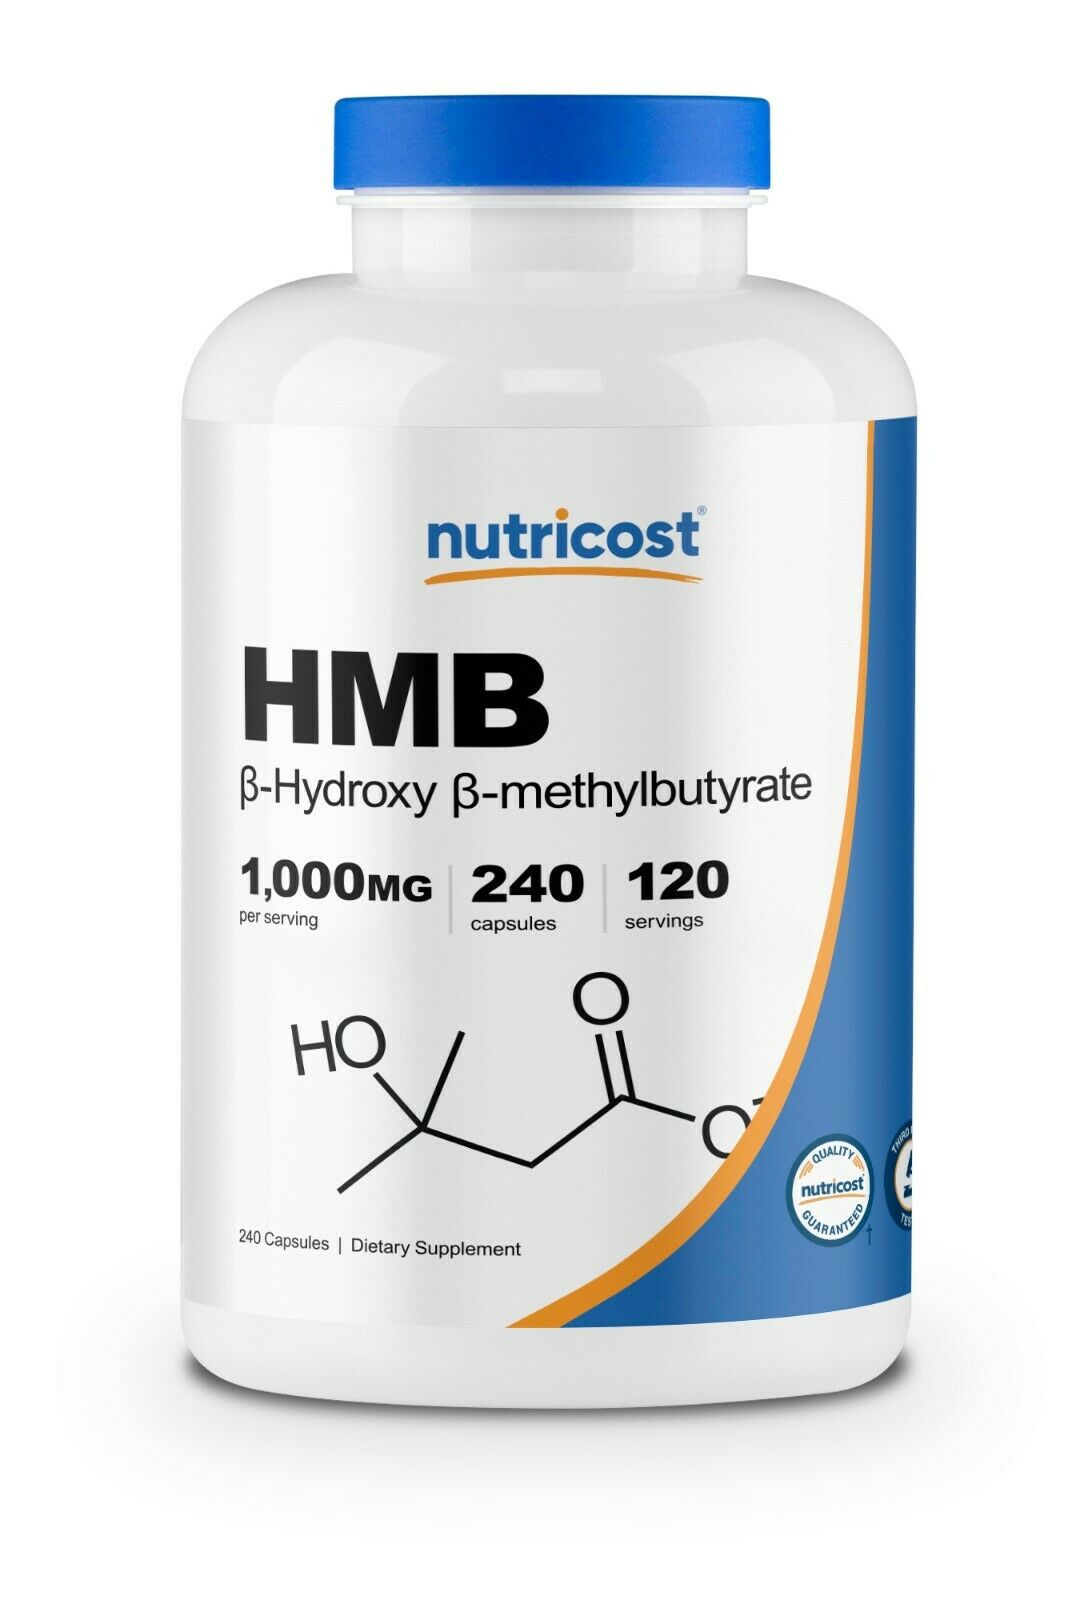 Nutricost Hmb (beta-hydroxy Beta-methylbutyric) 1000mg (240 Capsules)